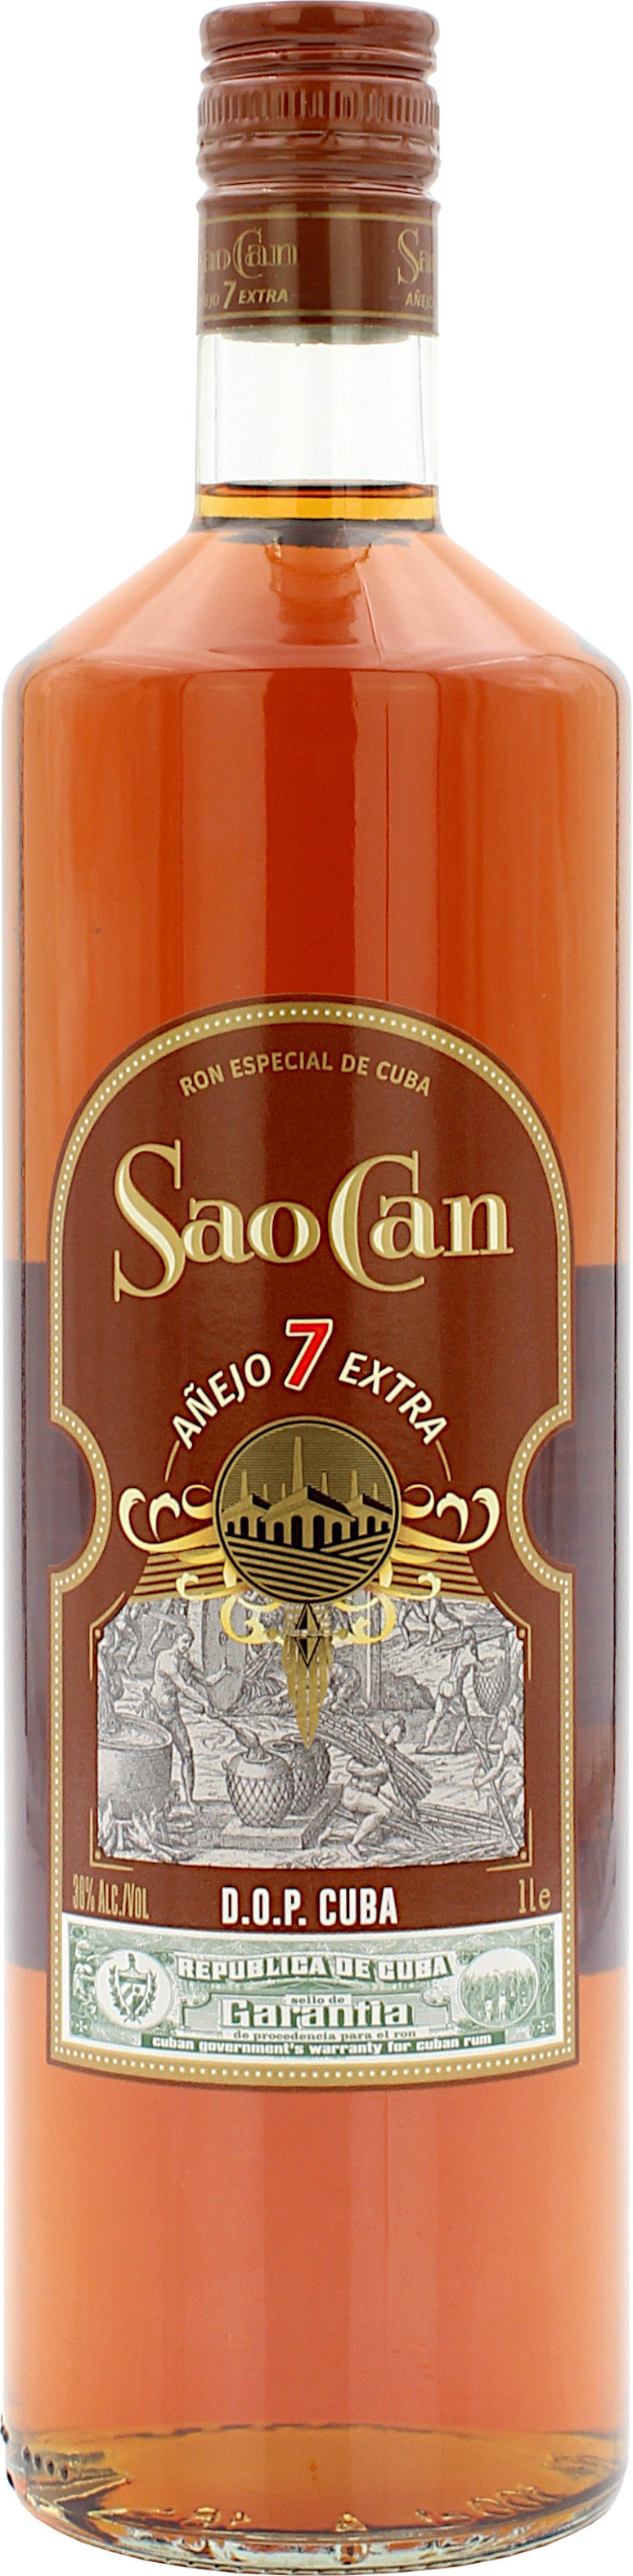 Ron Sao Can Anejo 7 Jahre Extra 38.0% 1 Liter